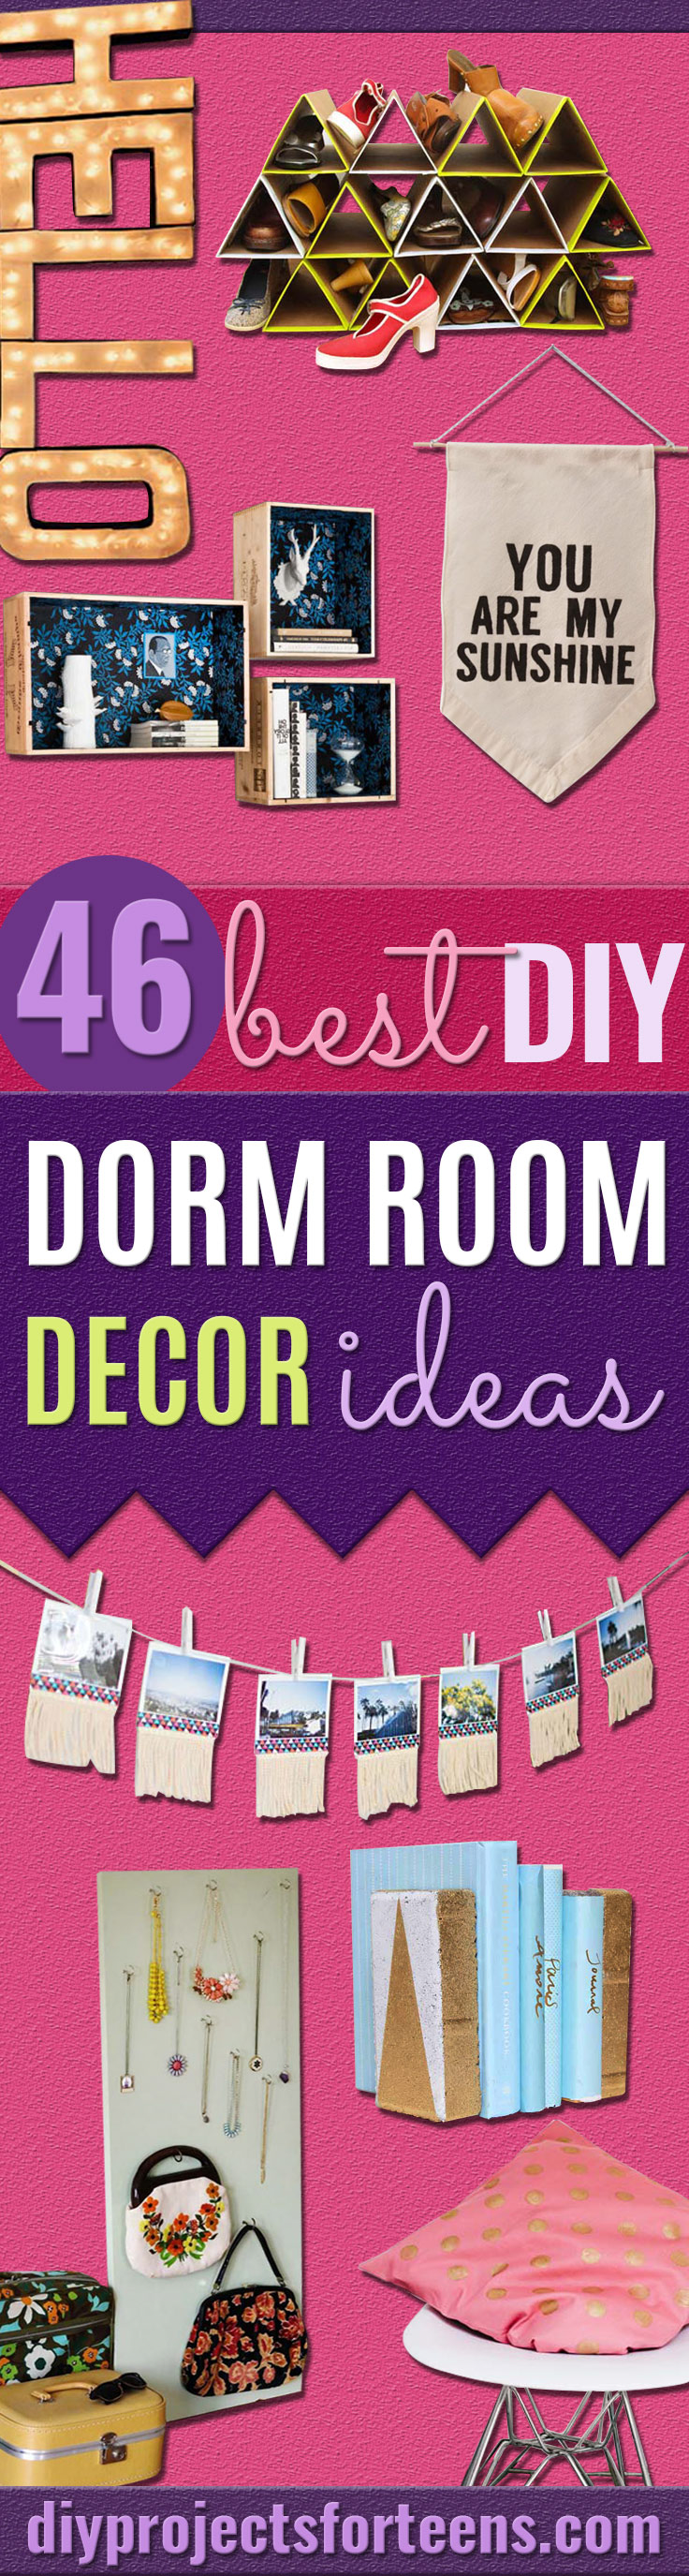 46 Best DIY Dorm Room Decor Ideas - DIY Projects for Teens